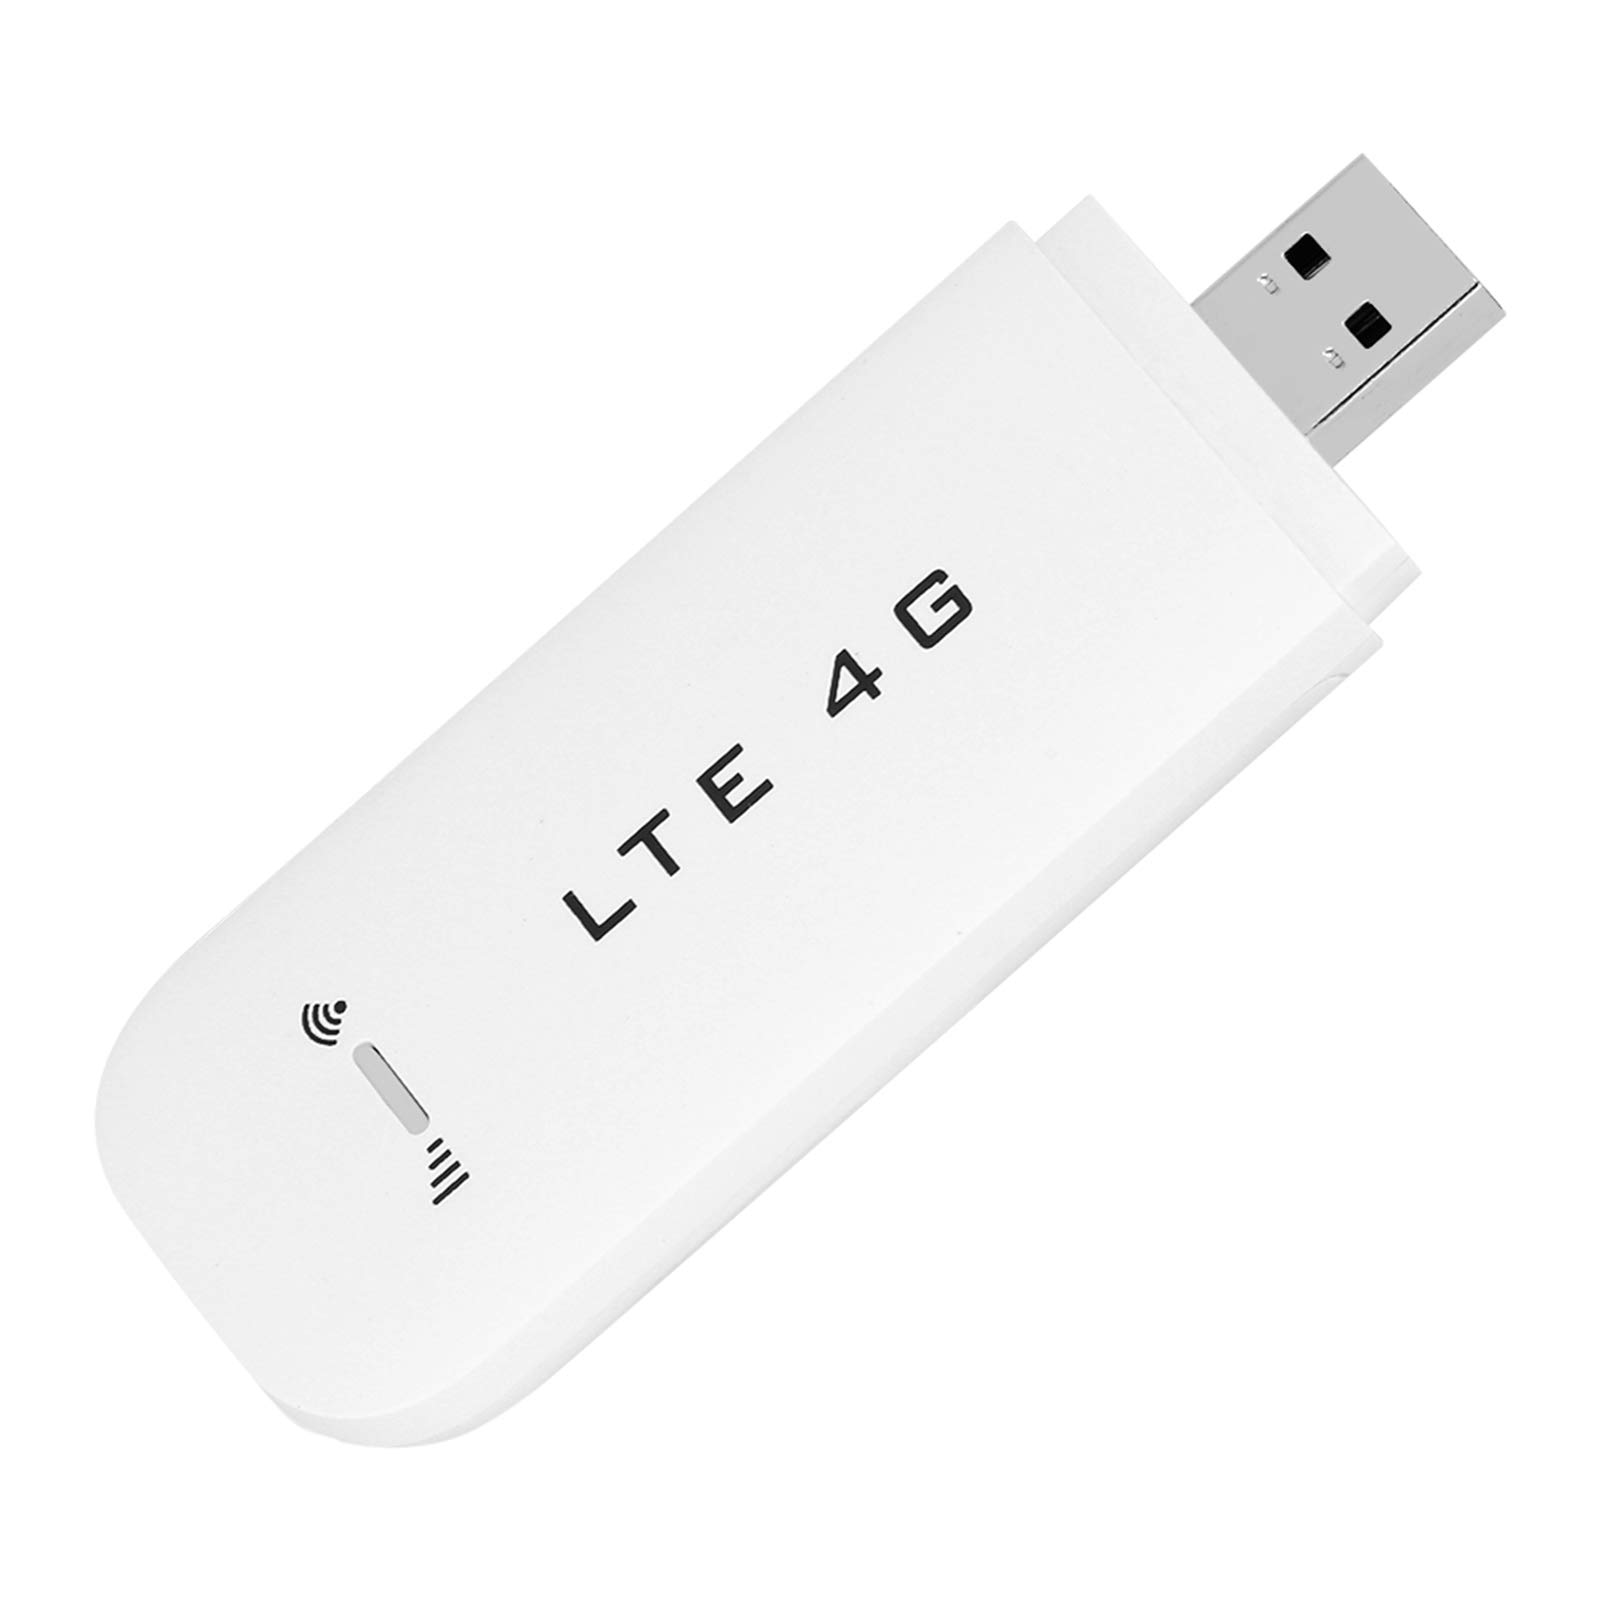 TOPINCN 4G LTE USB WiFi USB Network Adapter Portable WiFi for Laptop Desktop PC Computer, Wireless WiFi Signal Receiver Modem Stick Mini Hotspot (with WiFi)